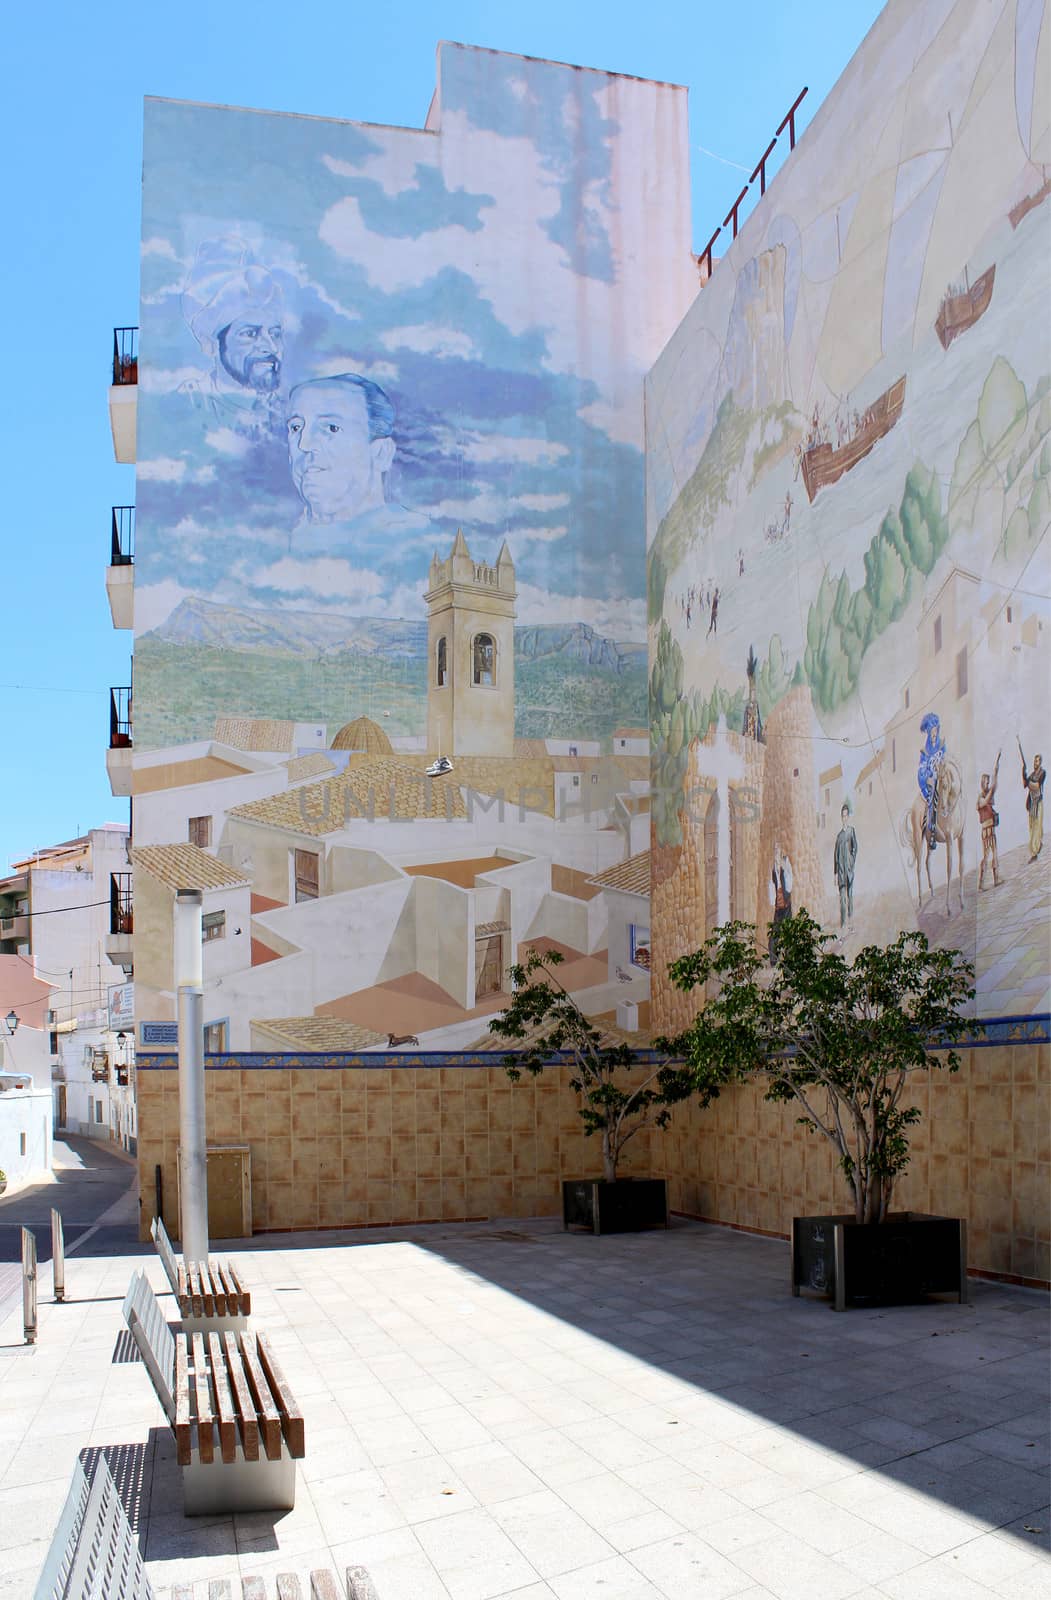 Painted Mural at Plaza D. Manuel Miro, calle mar, historic old town center, Calp, Spain. Mediterranean spanish coastal city (Costa Blanca).  
